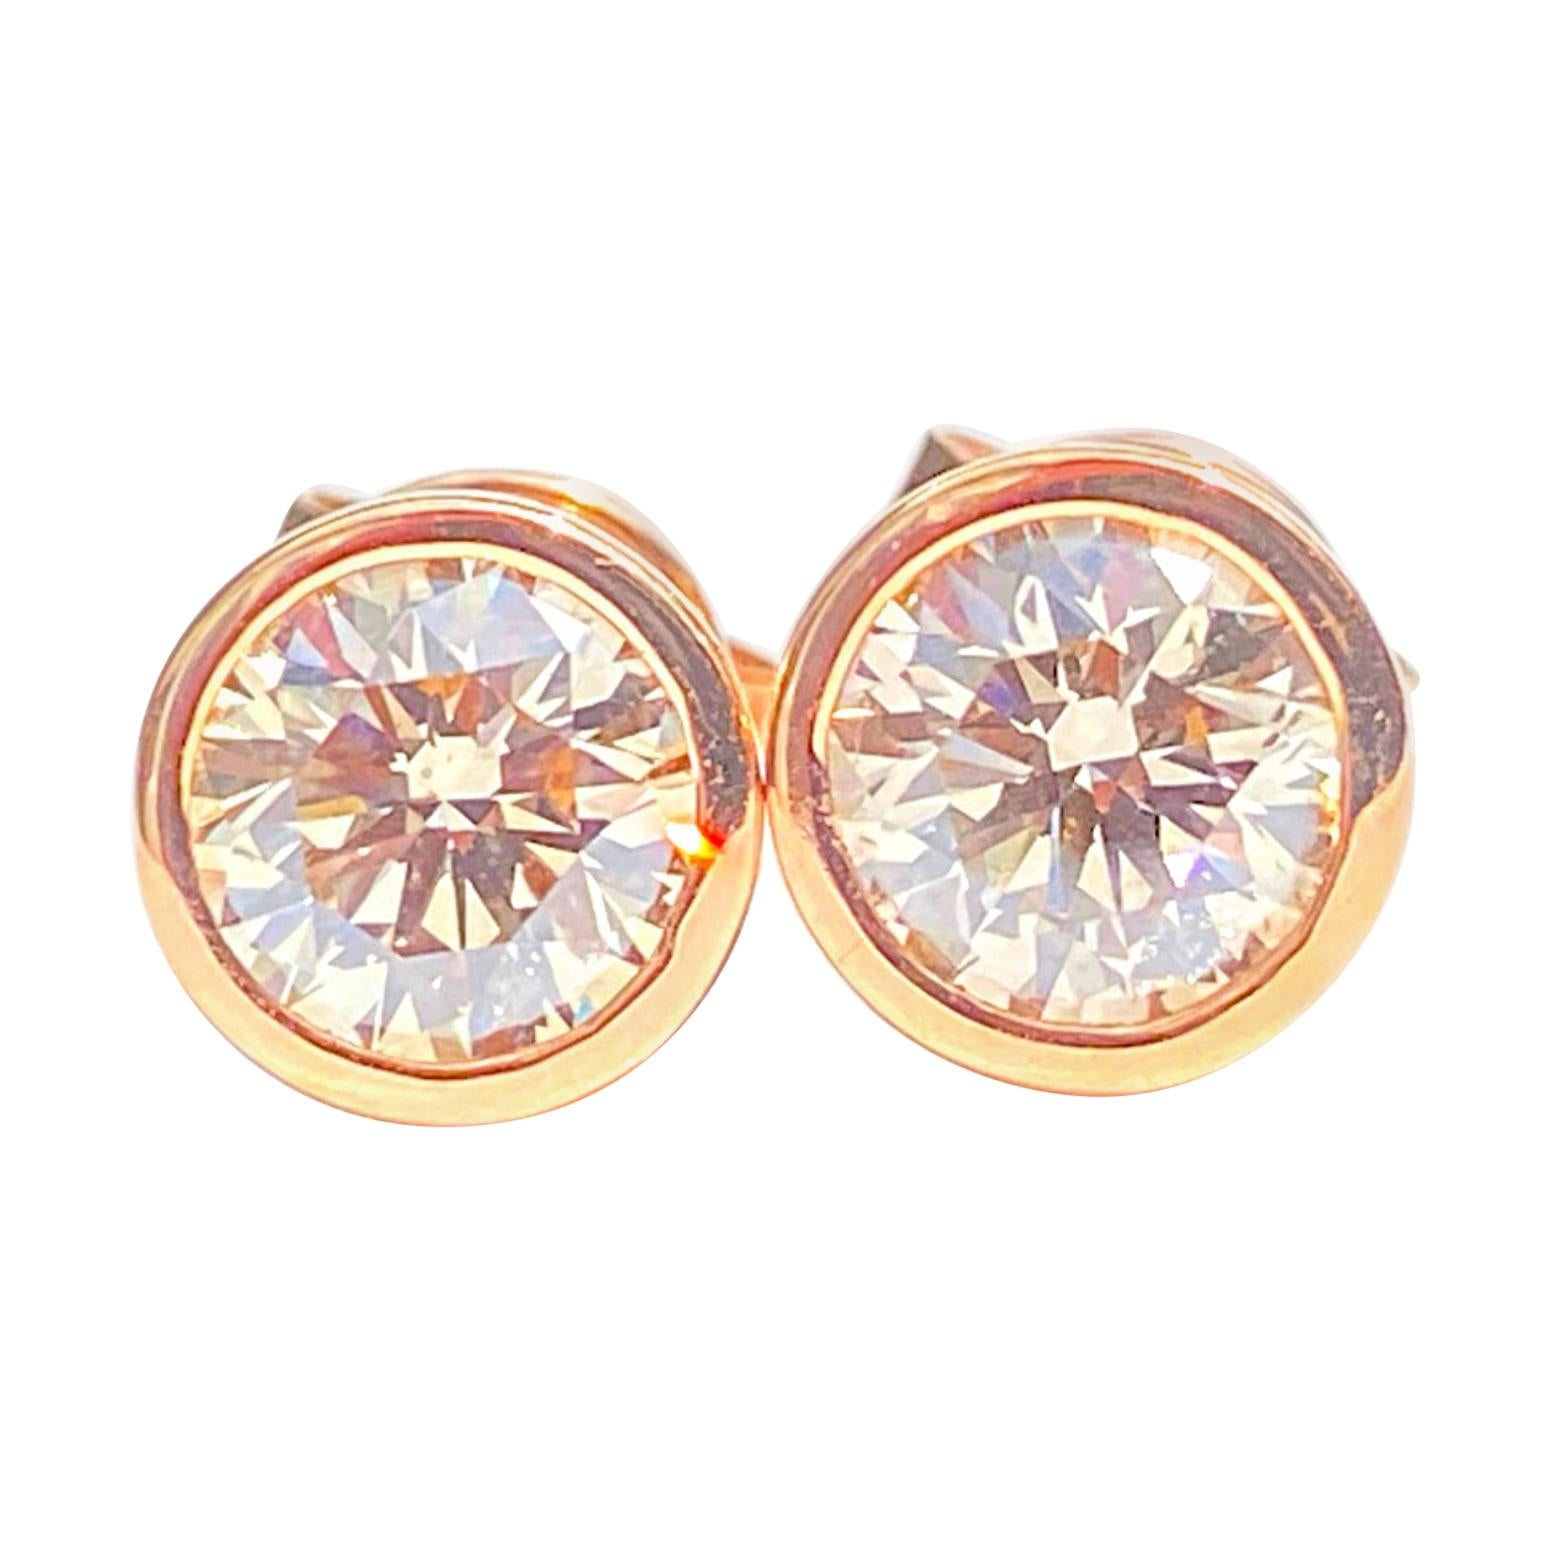 1.58 Carat Diamond and 18k Rose Gold Stud Earrings Round-Brilliant Cut Diamonds